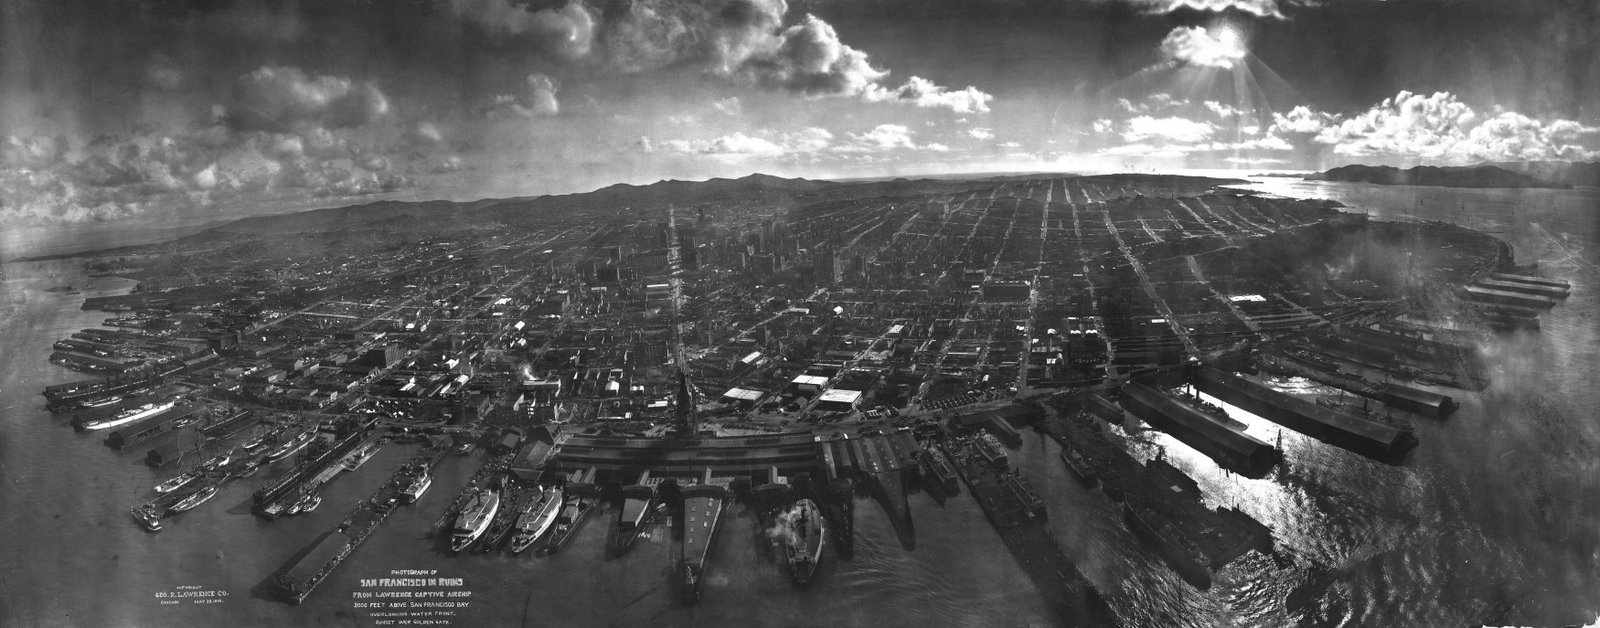 [Ruinas+de+San+Francisco+1906-2.jpg]